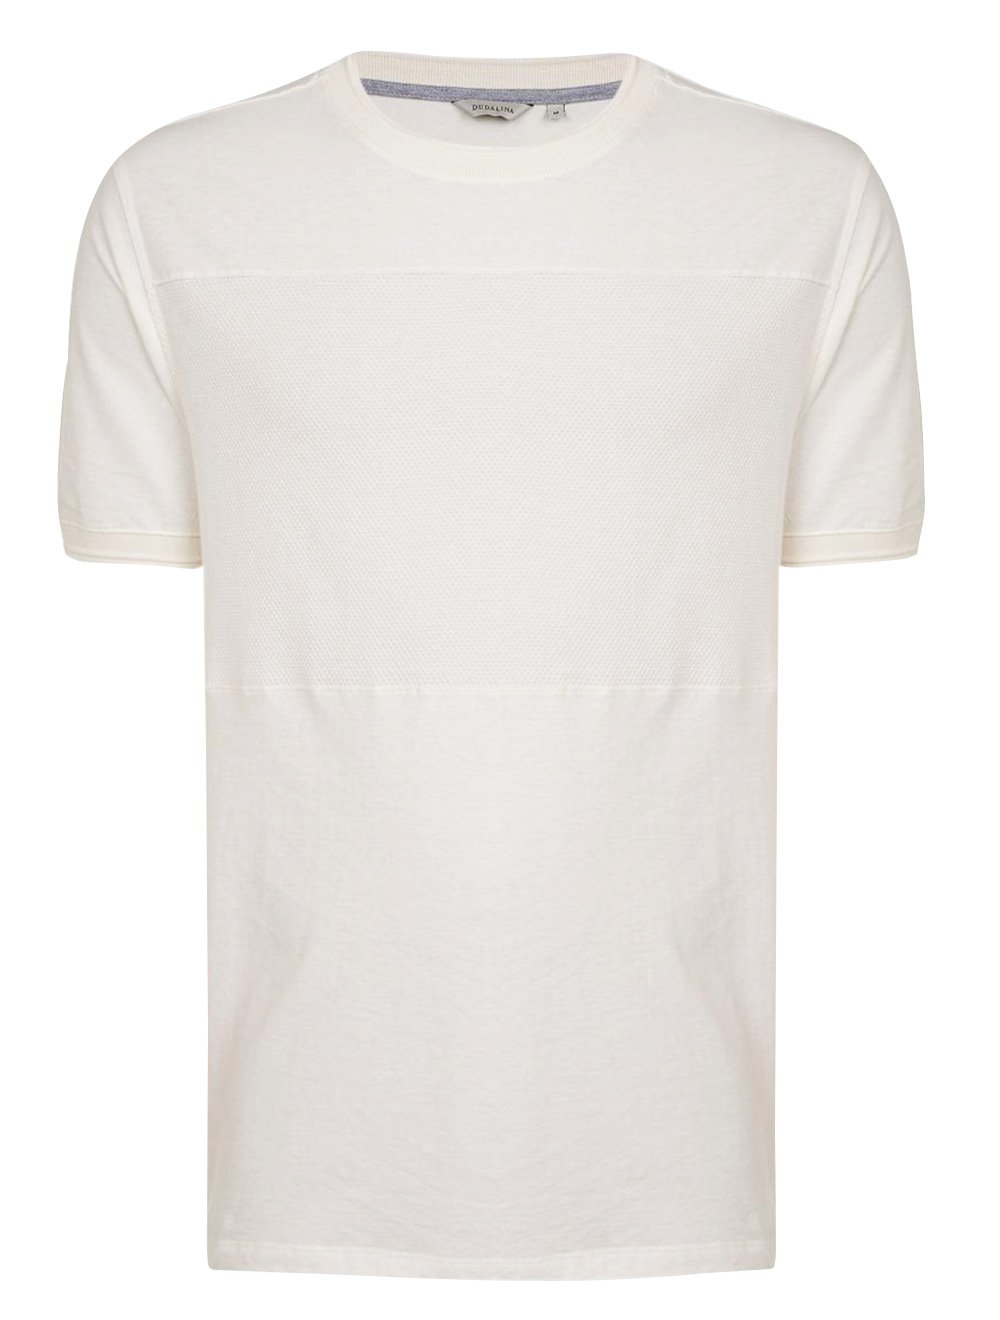 Camiseta Dudalina Masculina Recorte Textura Off-White